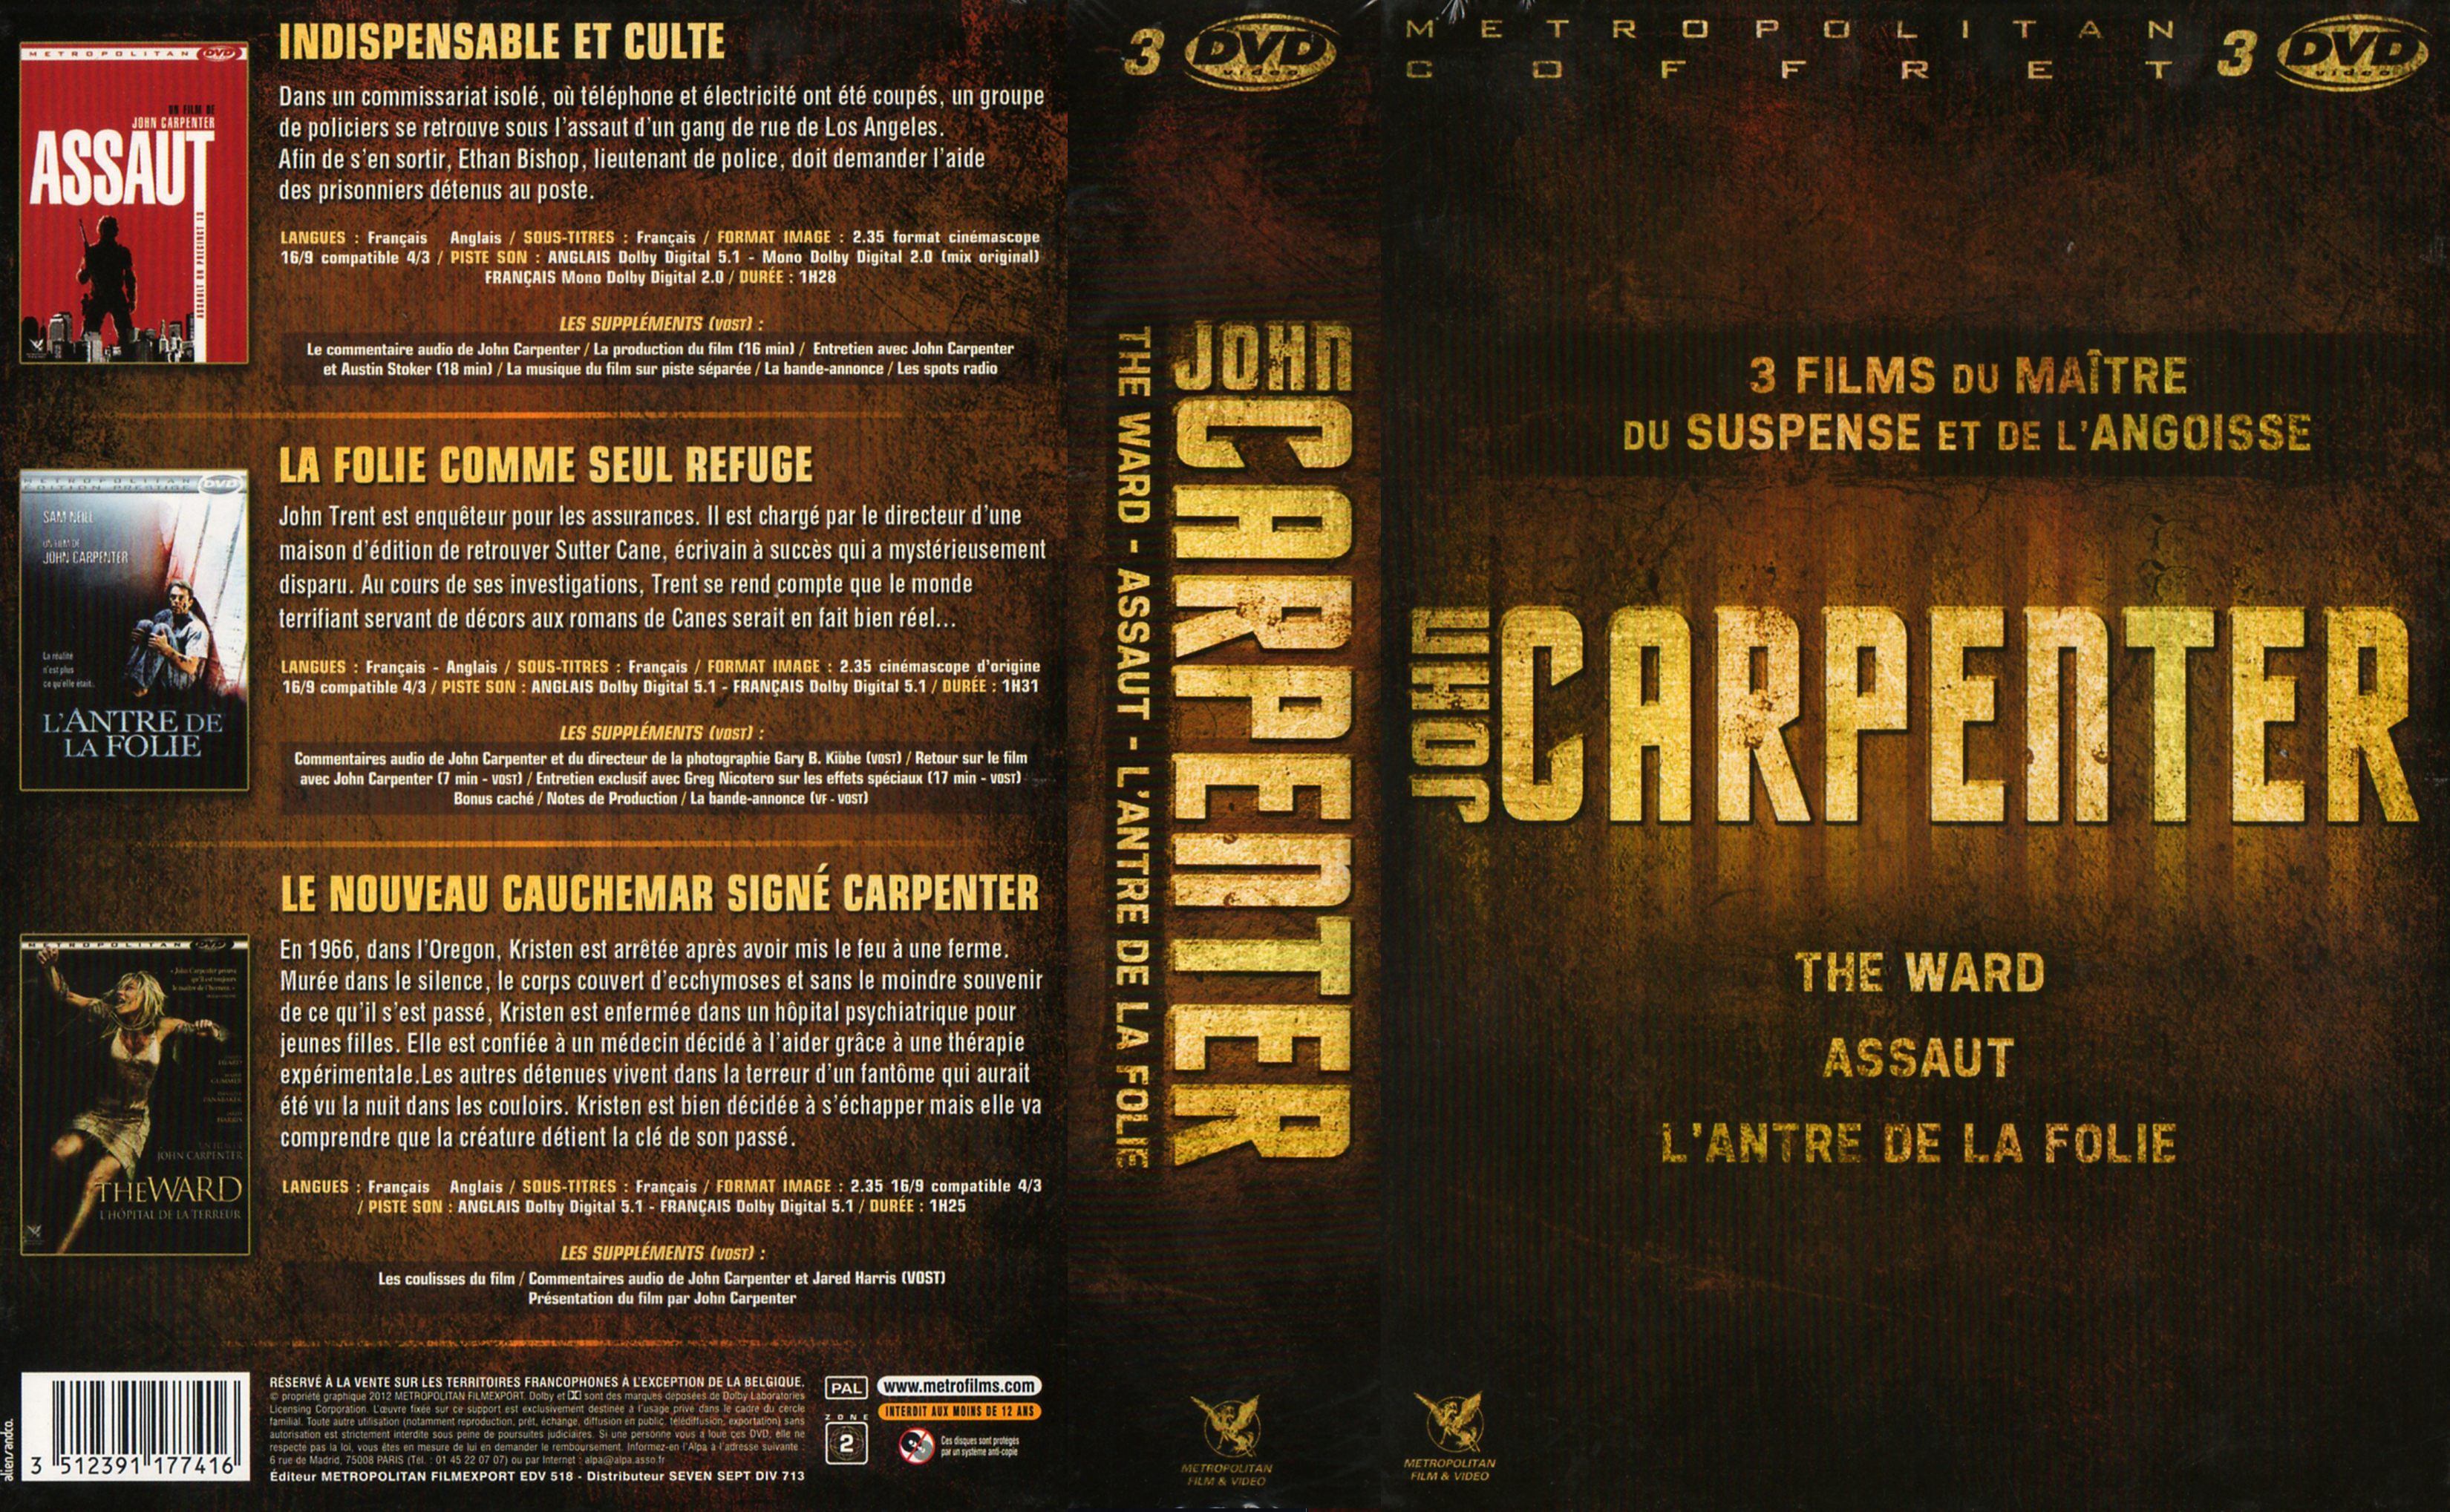 Jaquette DVD John Carpenter COFFRET